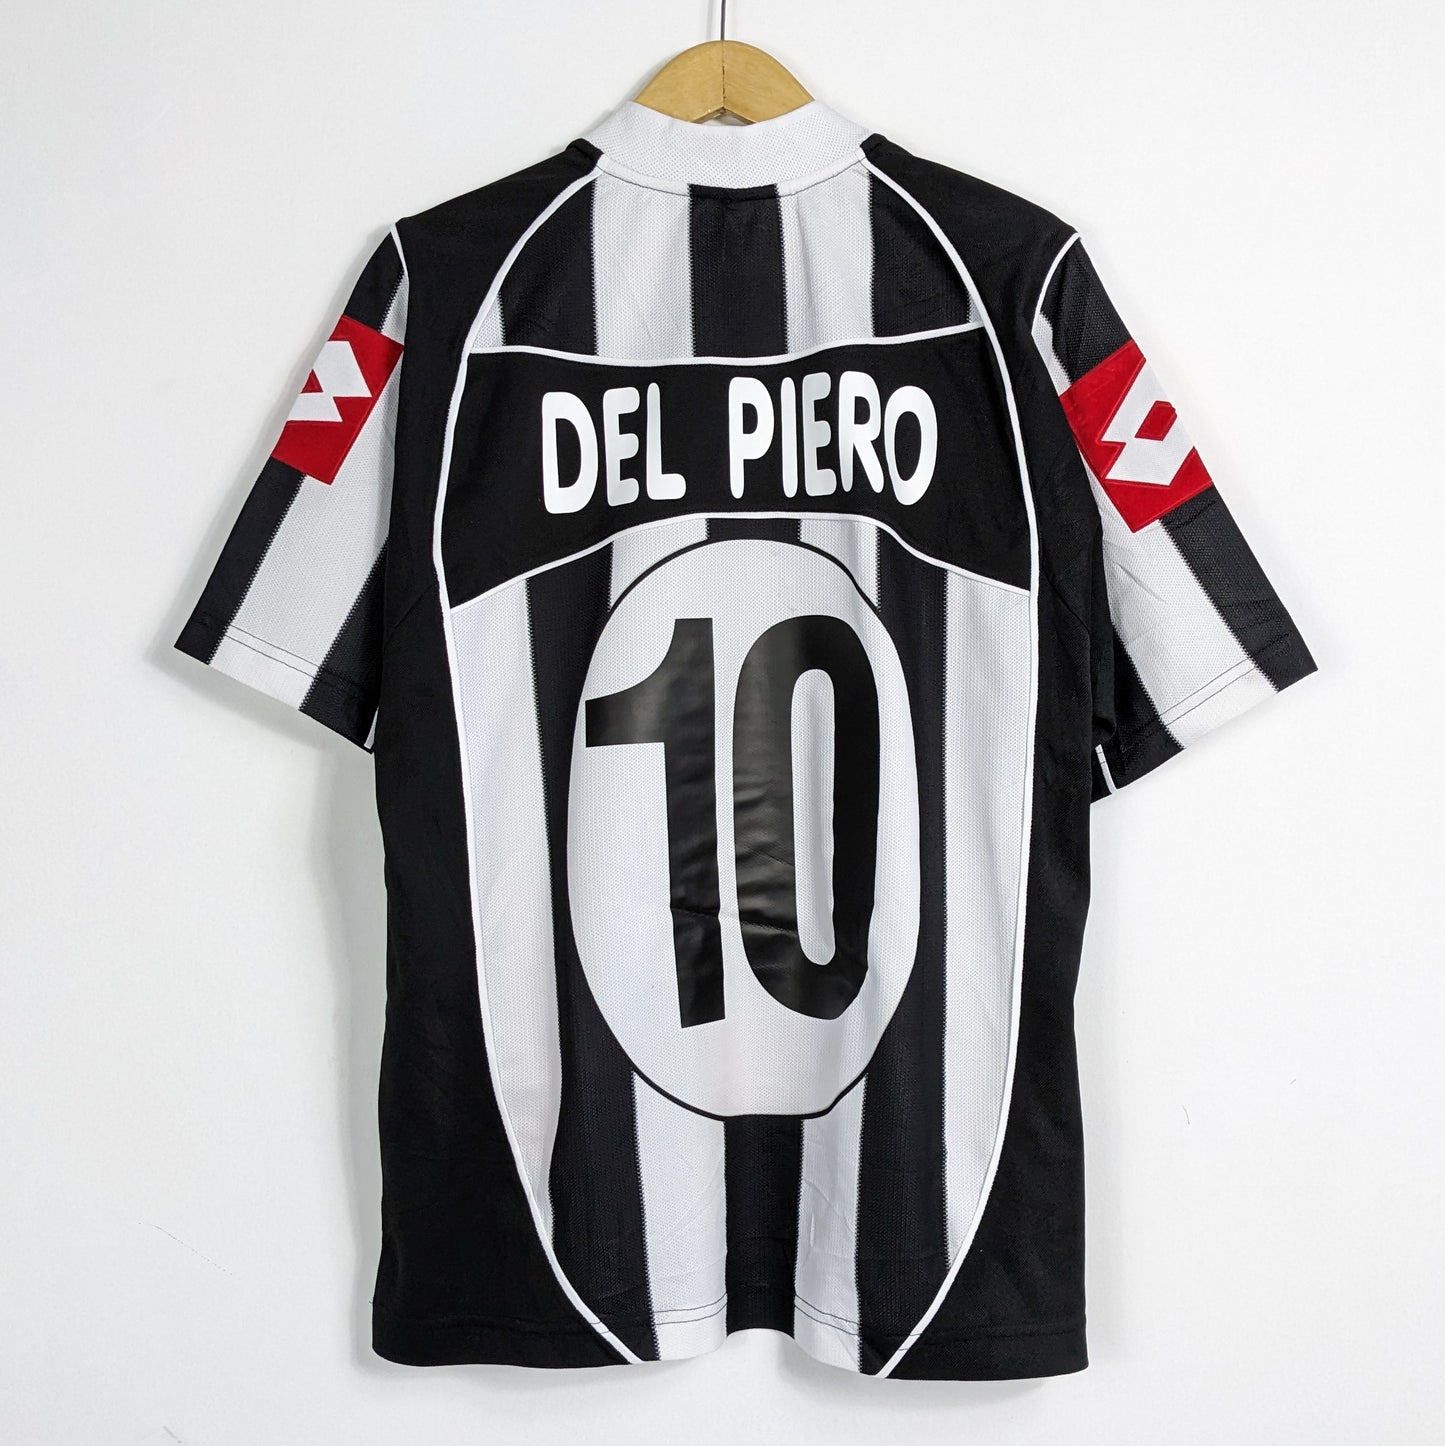 Authentic Juventus 2002/2003 Home - Del Piero #10 Size L